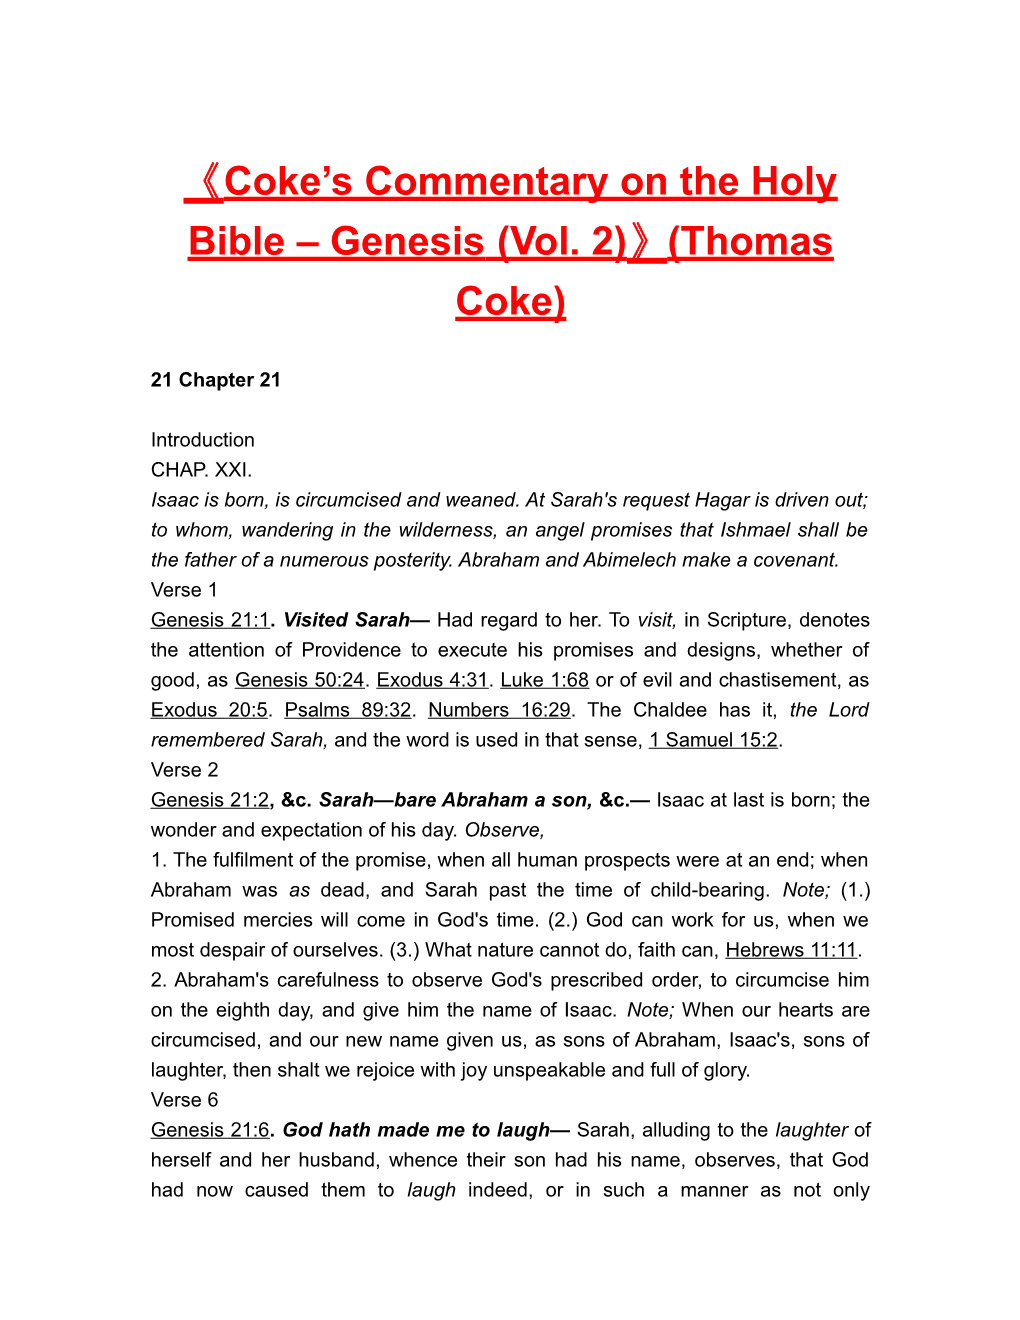 Coke S Commentary on the Holy Bible Genesis (Vol. 2) (Thomas Coke)